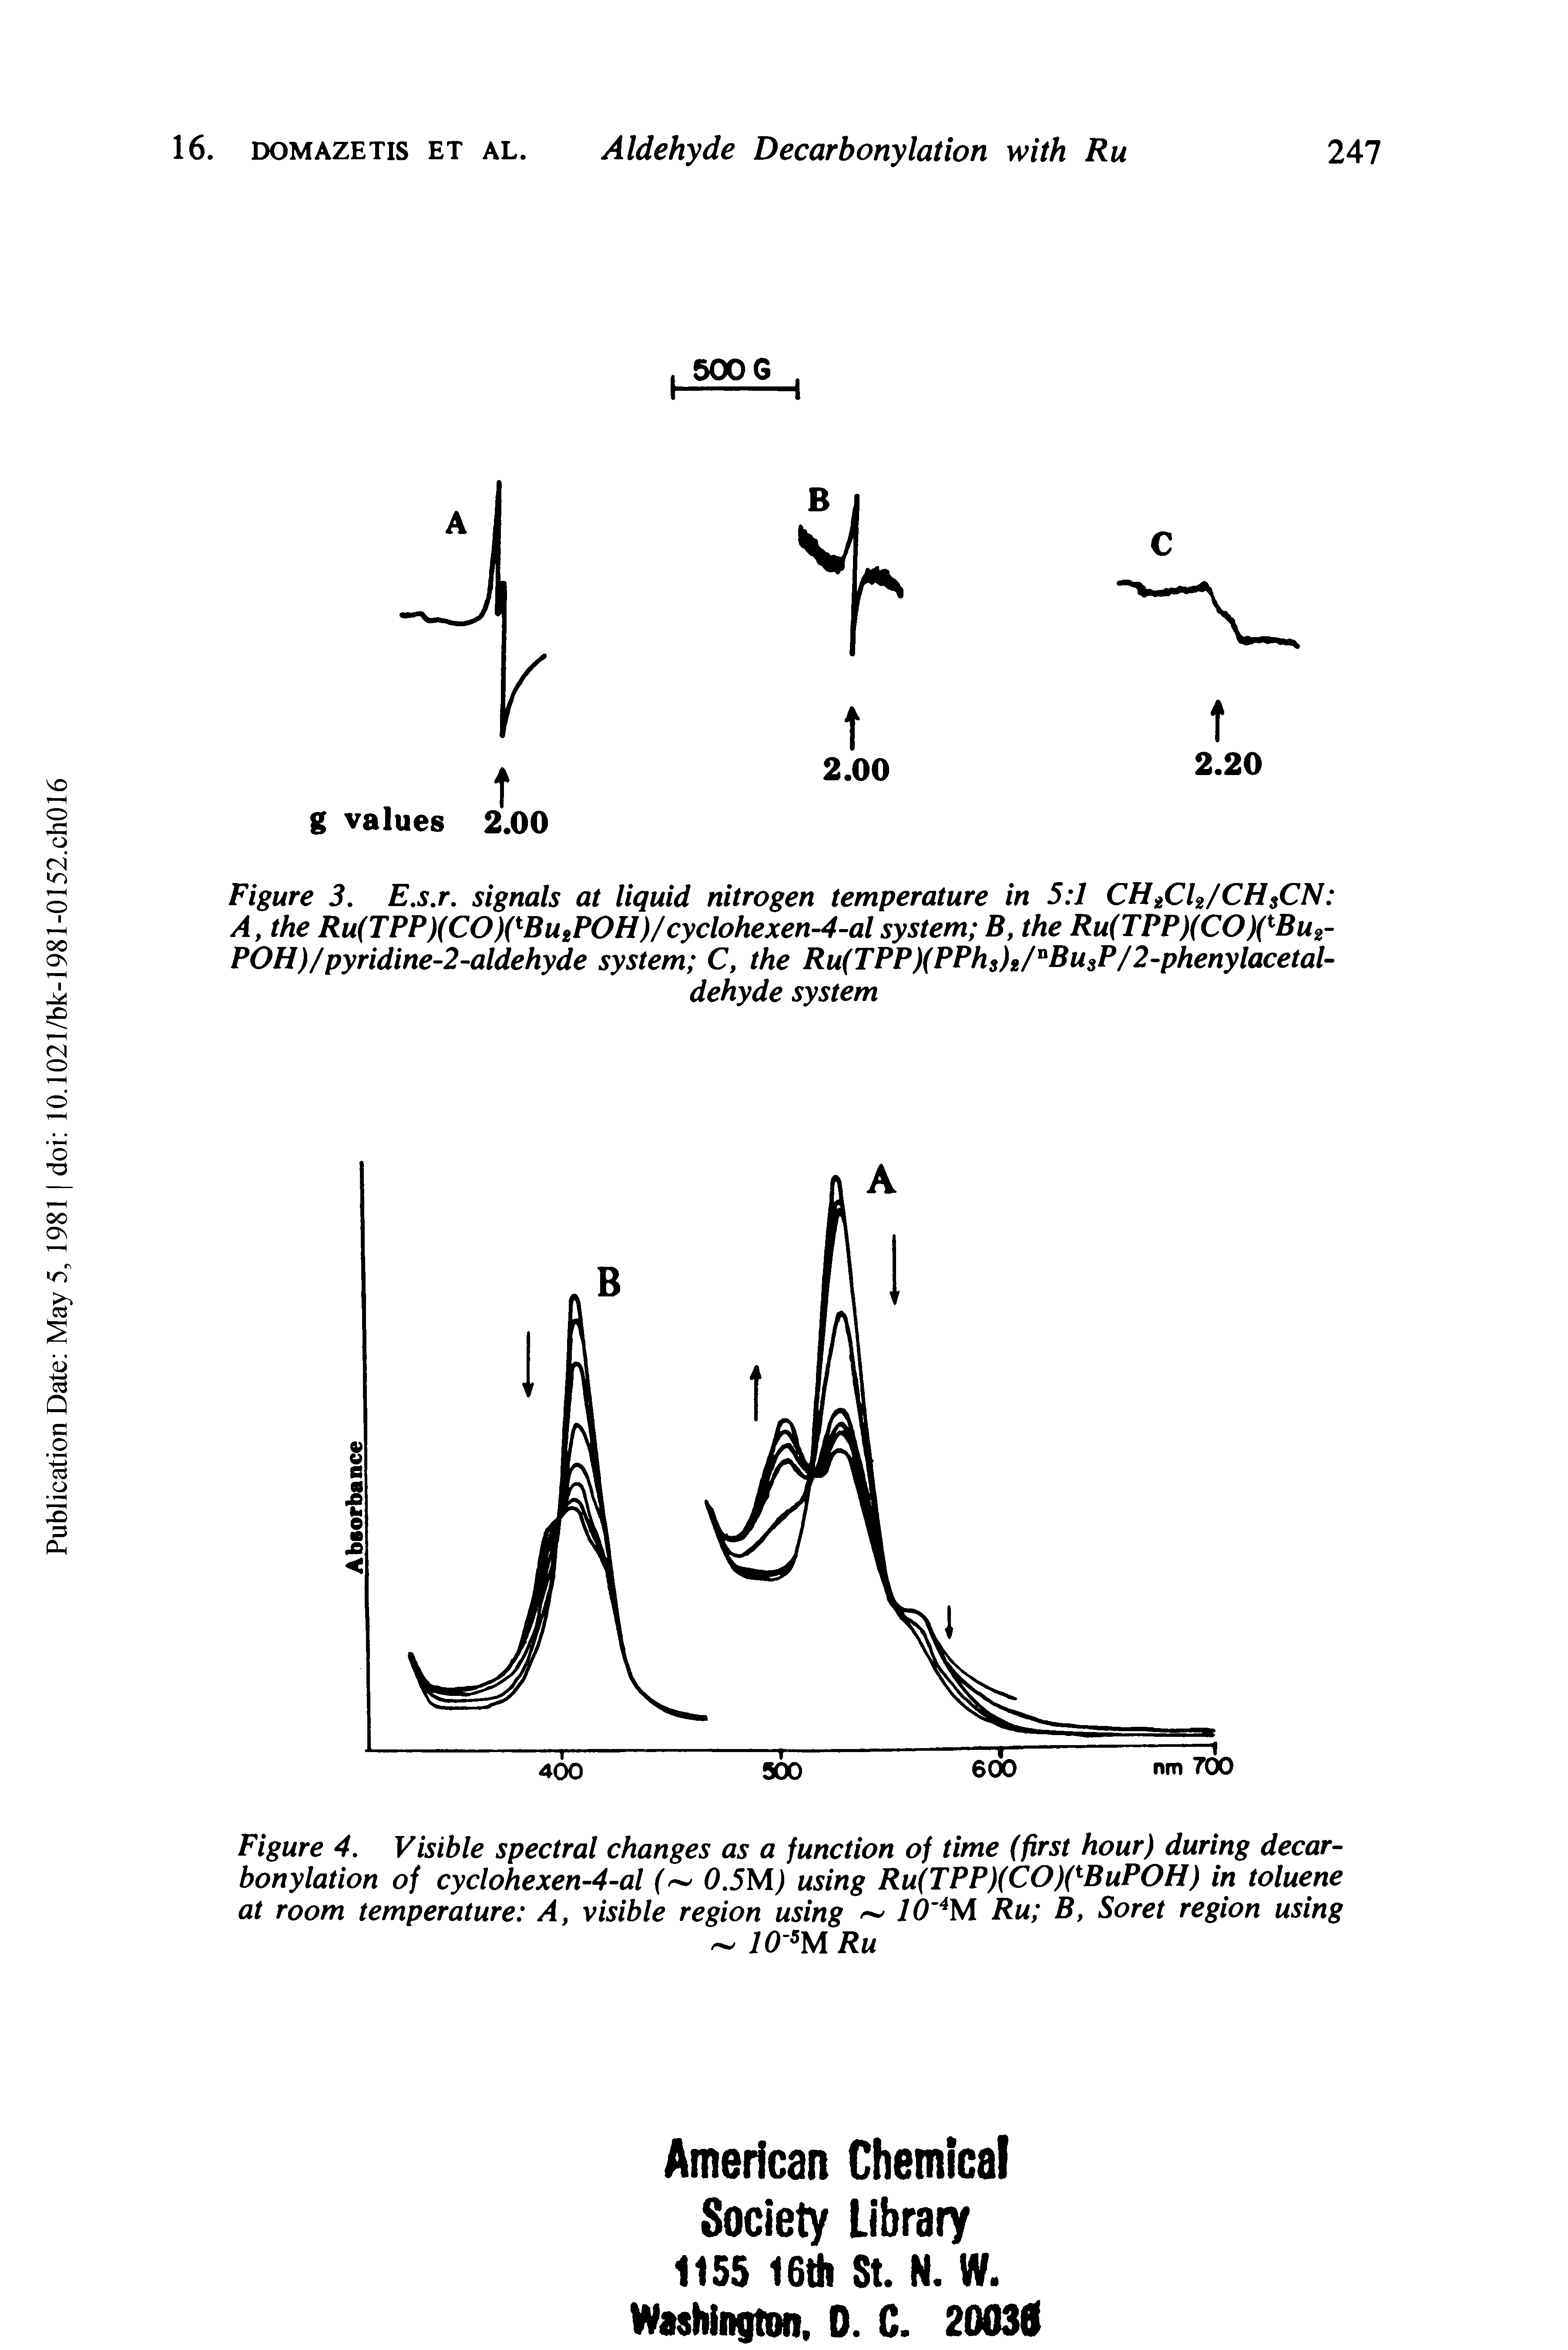 Figure 3. E.s.r. signals at liquid nitrogen temperature in 5 1 CH2Cl2/CH CN A, the Ru(TPP)(CO)(tButPOH)/cyclohexen-4-al system B, the Ru(TPP)(CO)( Bu2-POH)/pyridine-2-aldehyde system C, the Ru(TPP)(PPhs)t/nBusP/2-phenylacetal-...